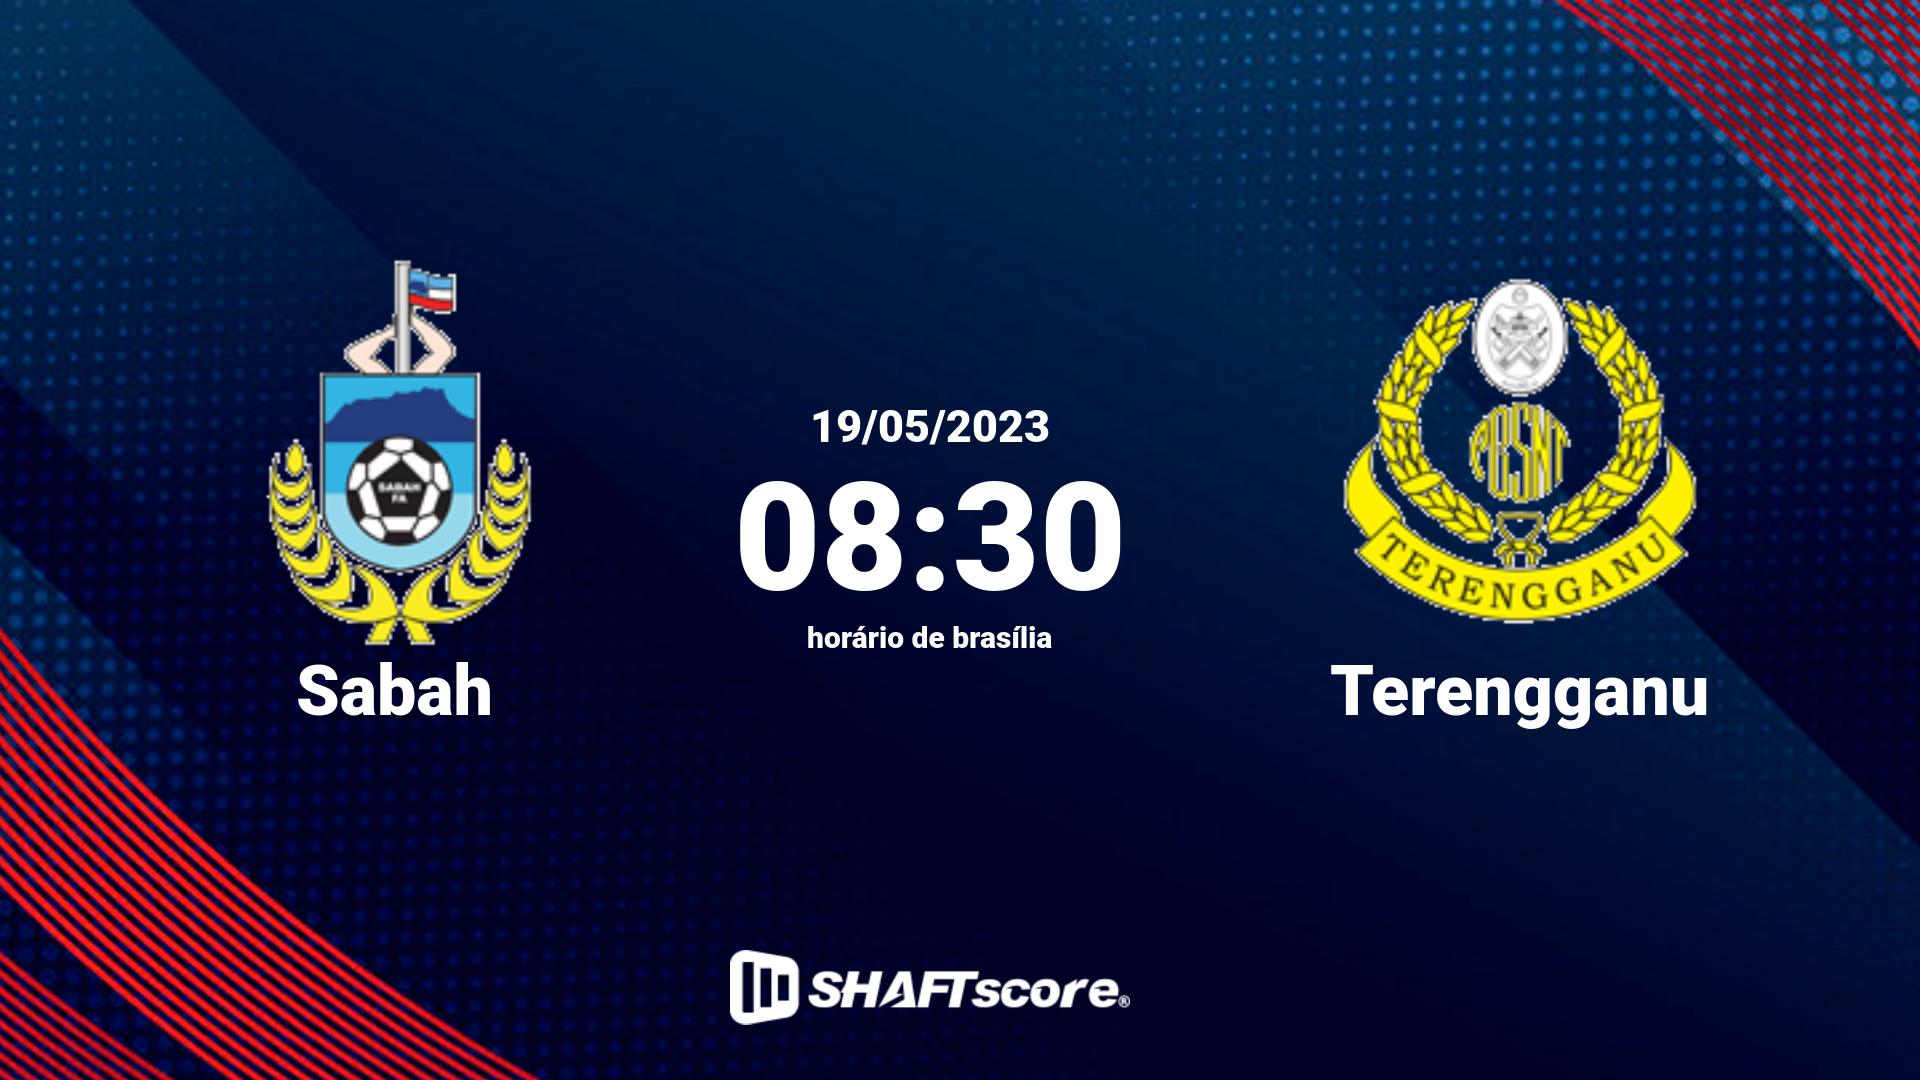 Estatísticas do jogo Sabah vs Terengganu 19.05 08:30